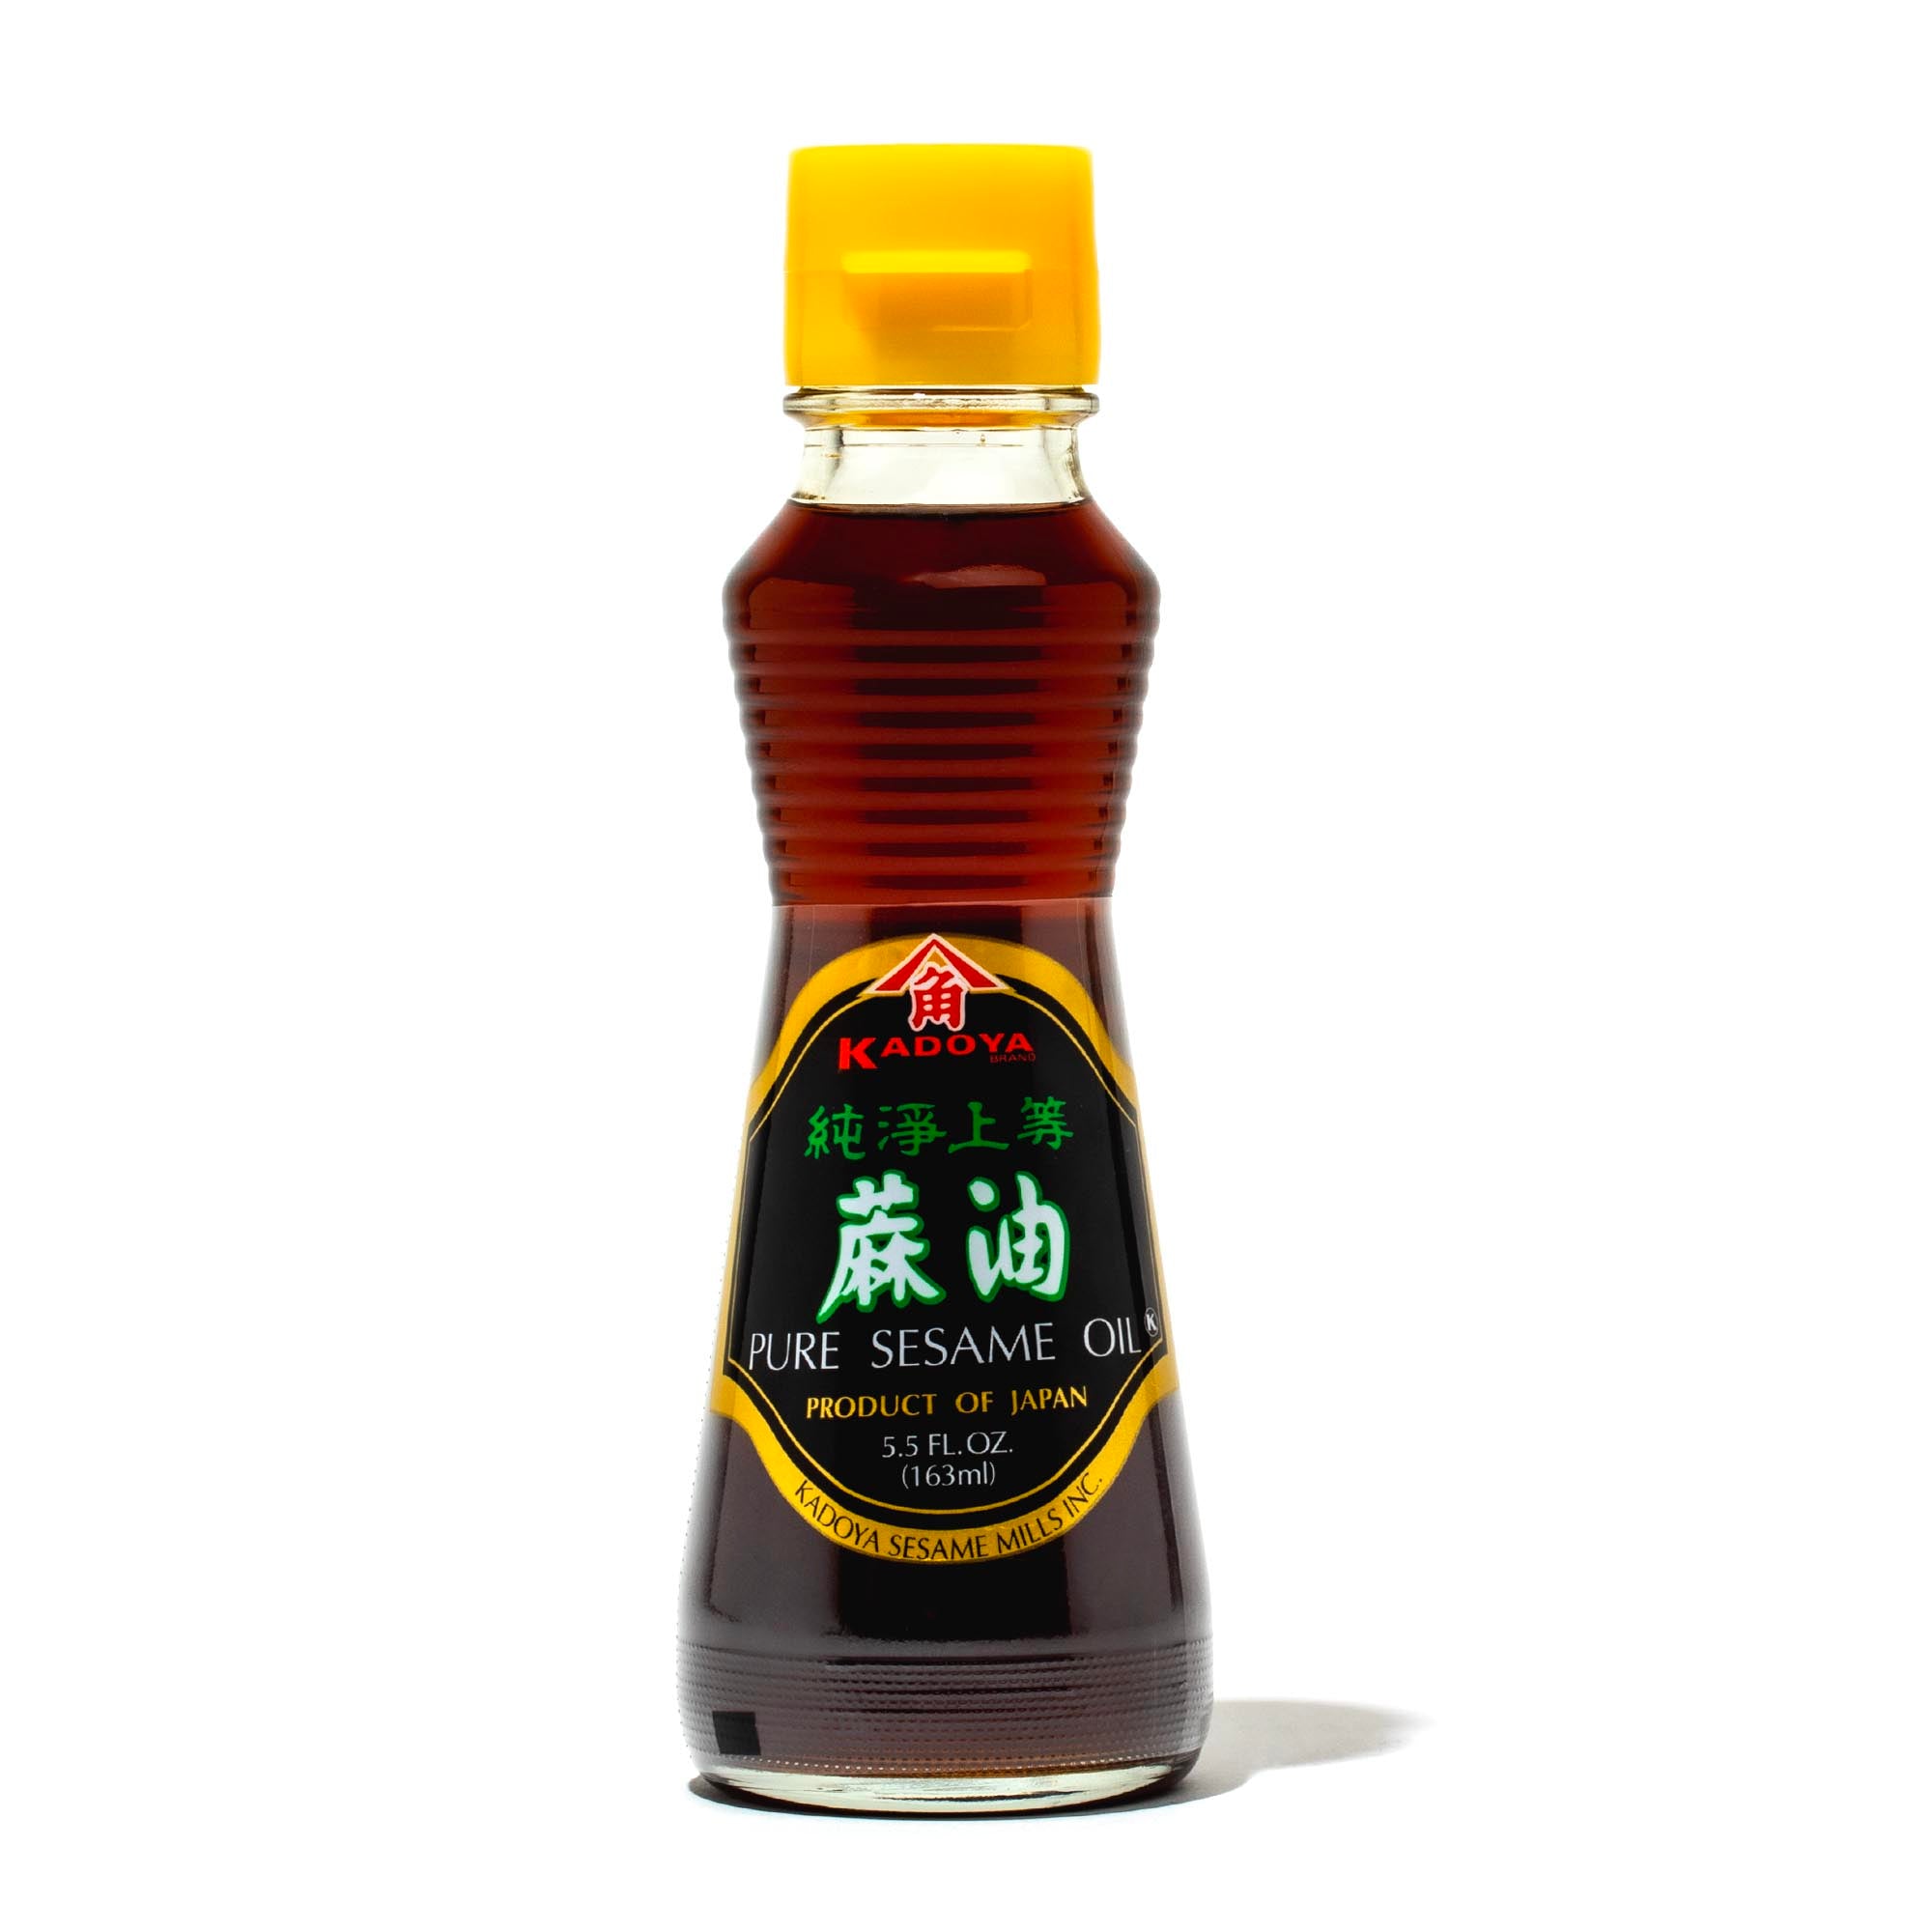 Kadoya Pure Sesame Oil | Bokksu Market